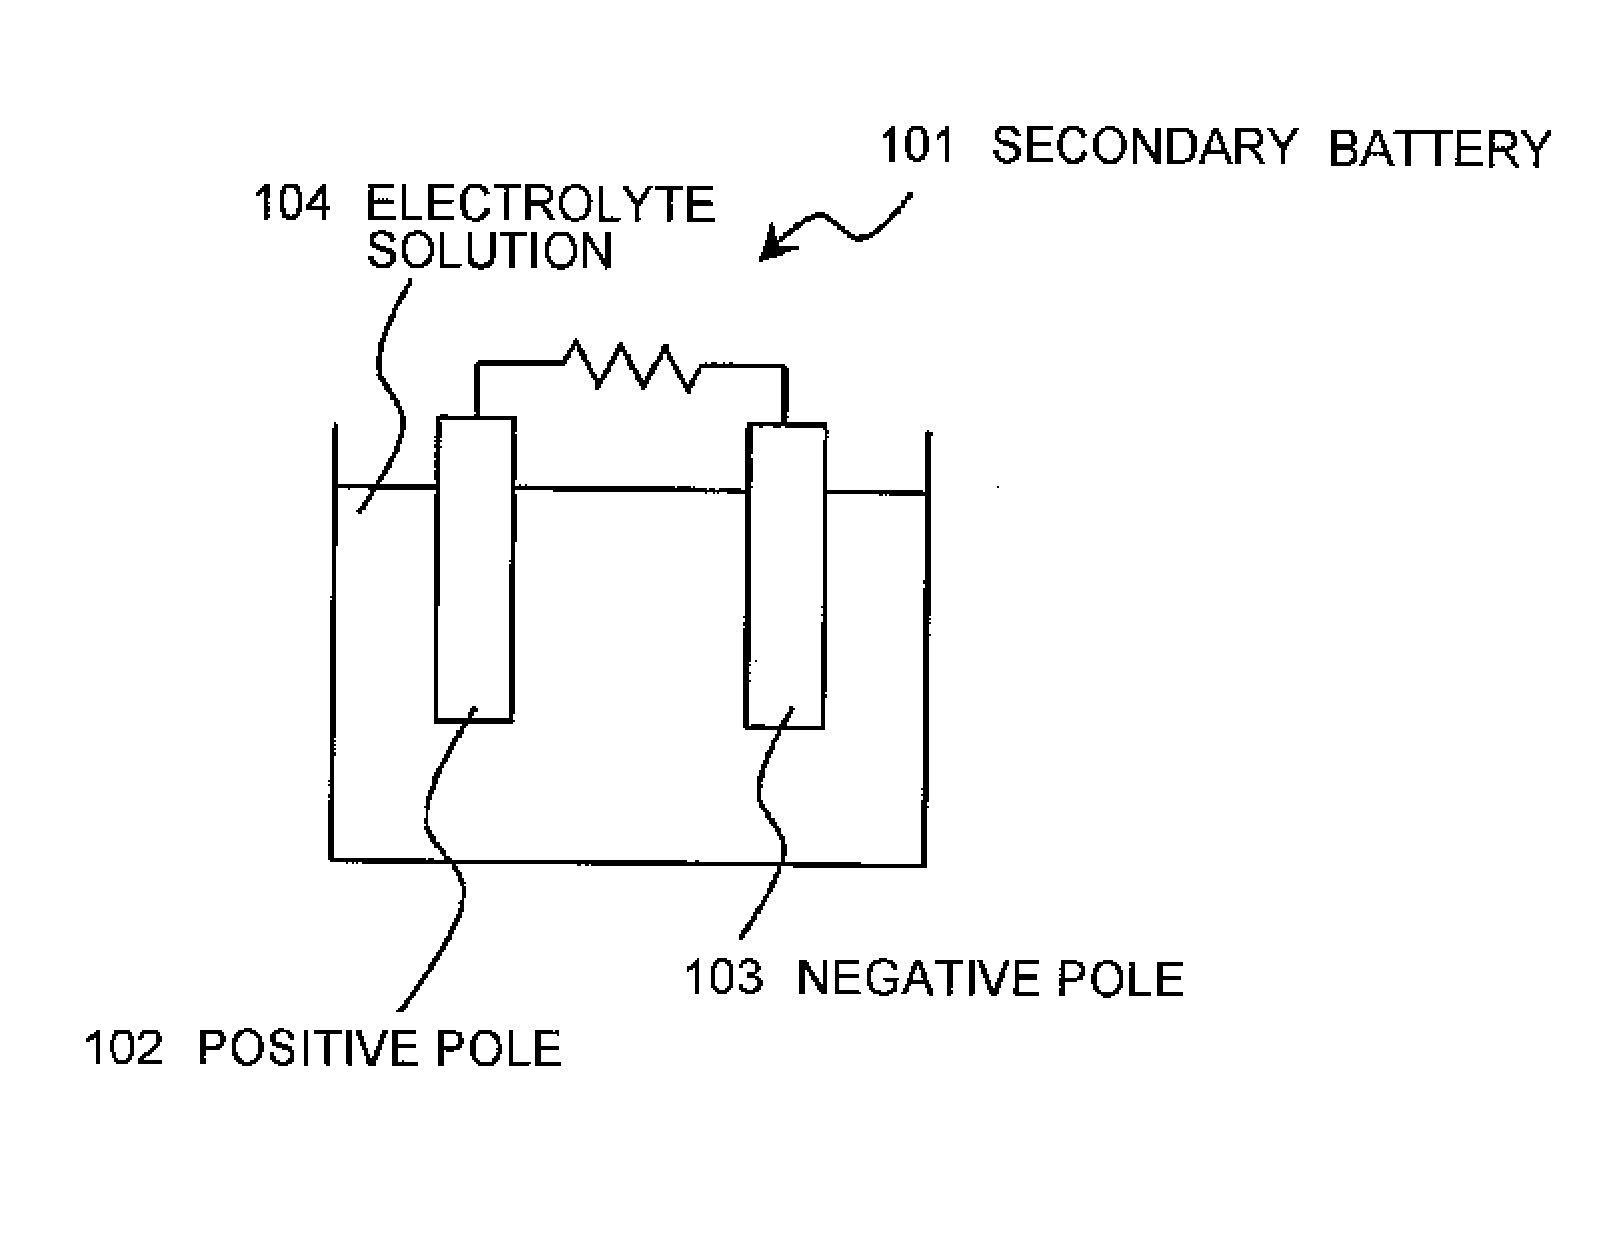 Secondary battery